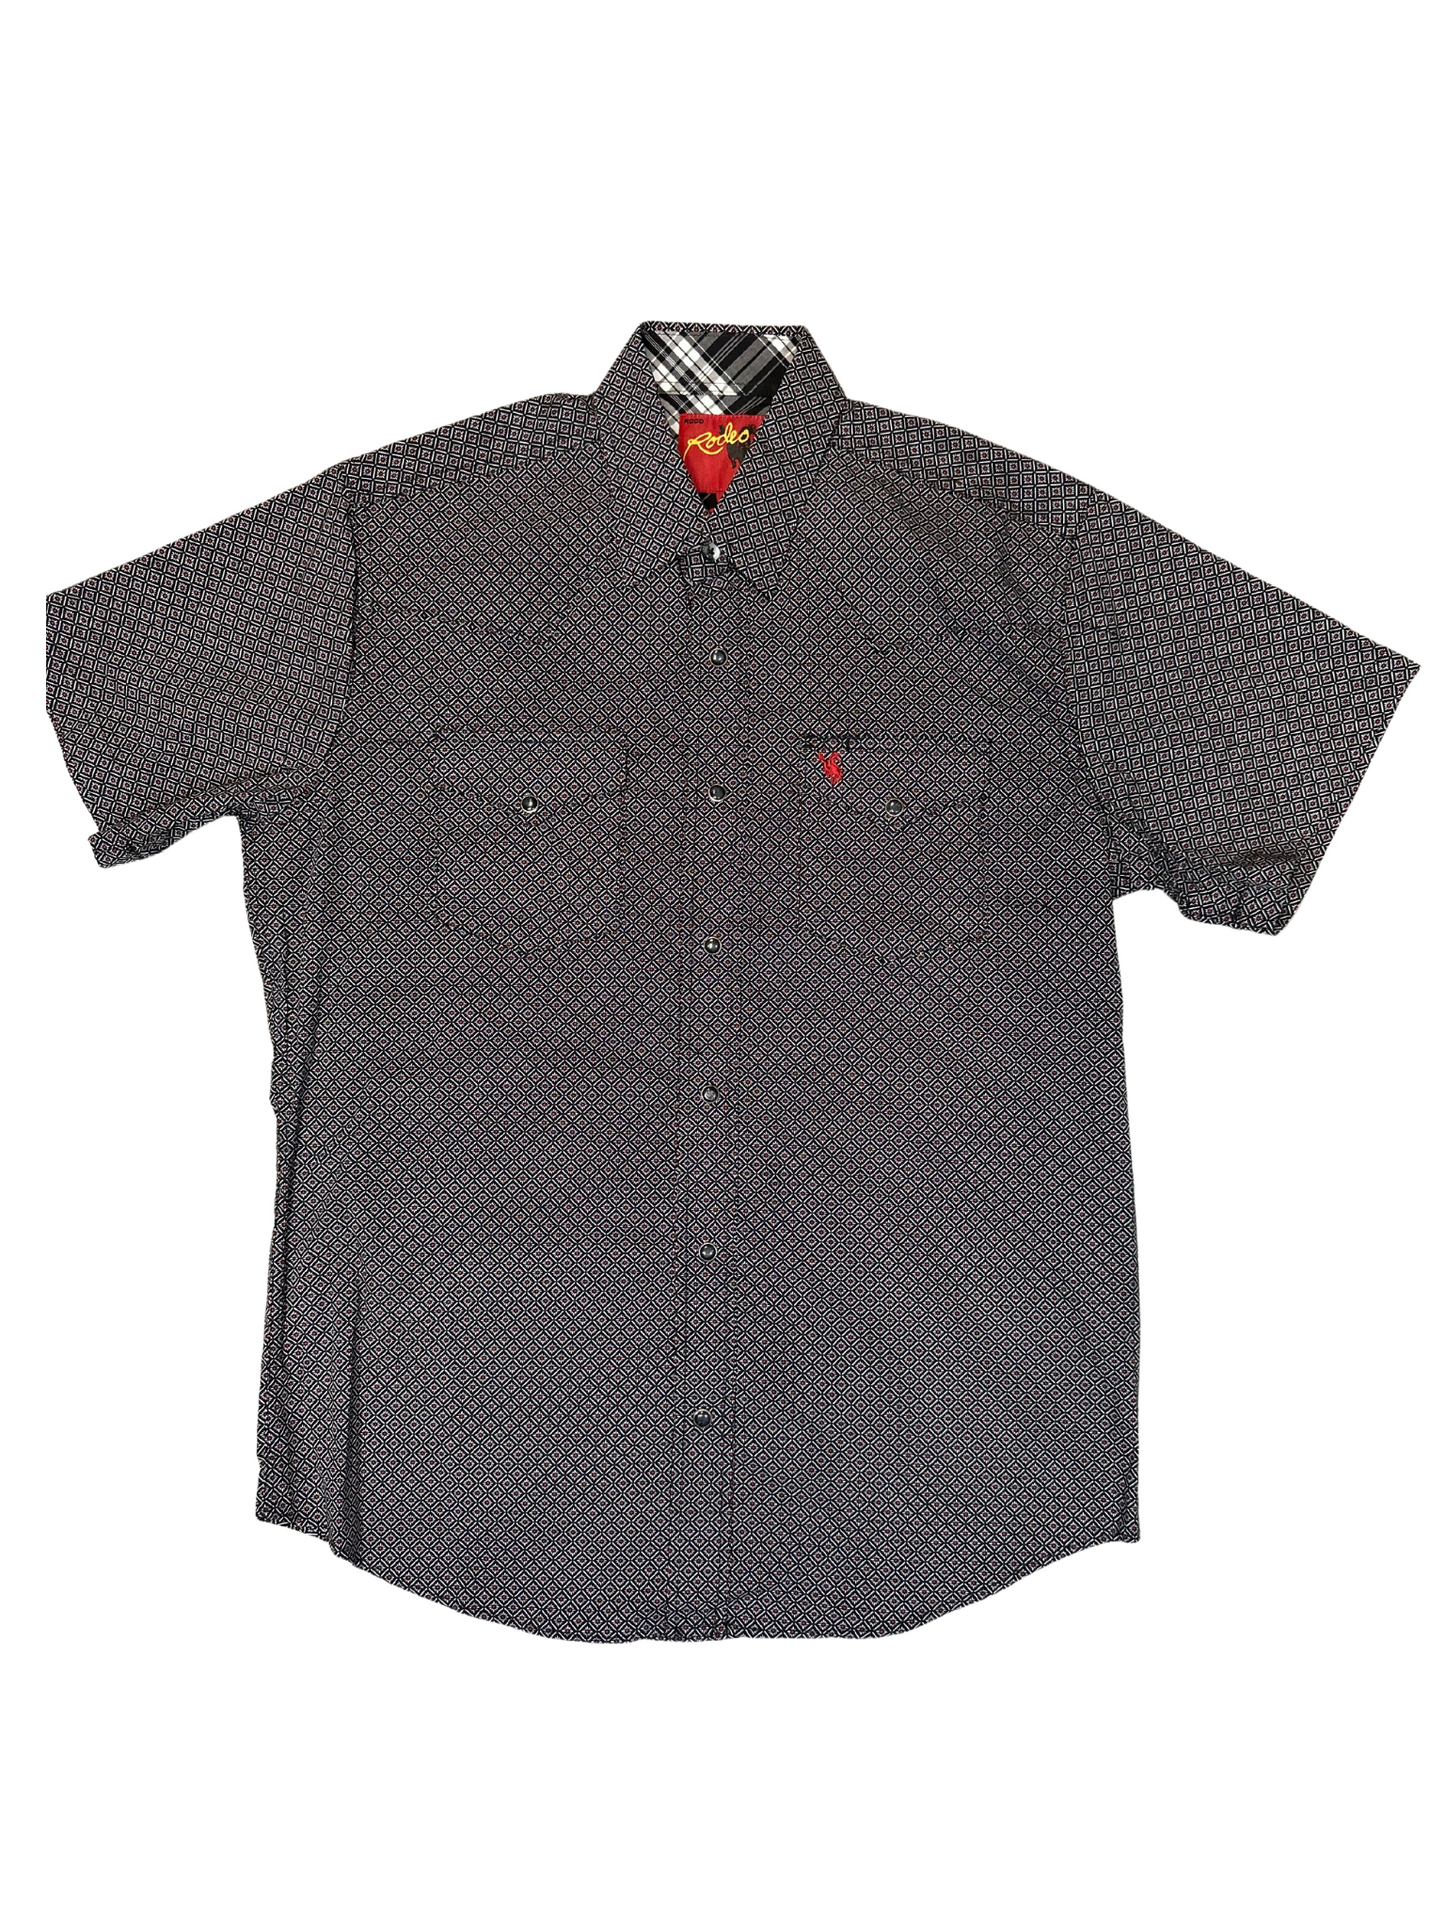 Men's Rodeo Black/Red Short Sleeve Button Down Shirt